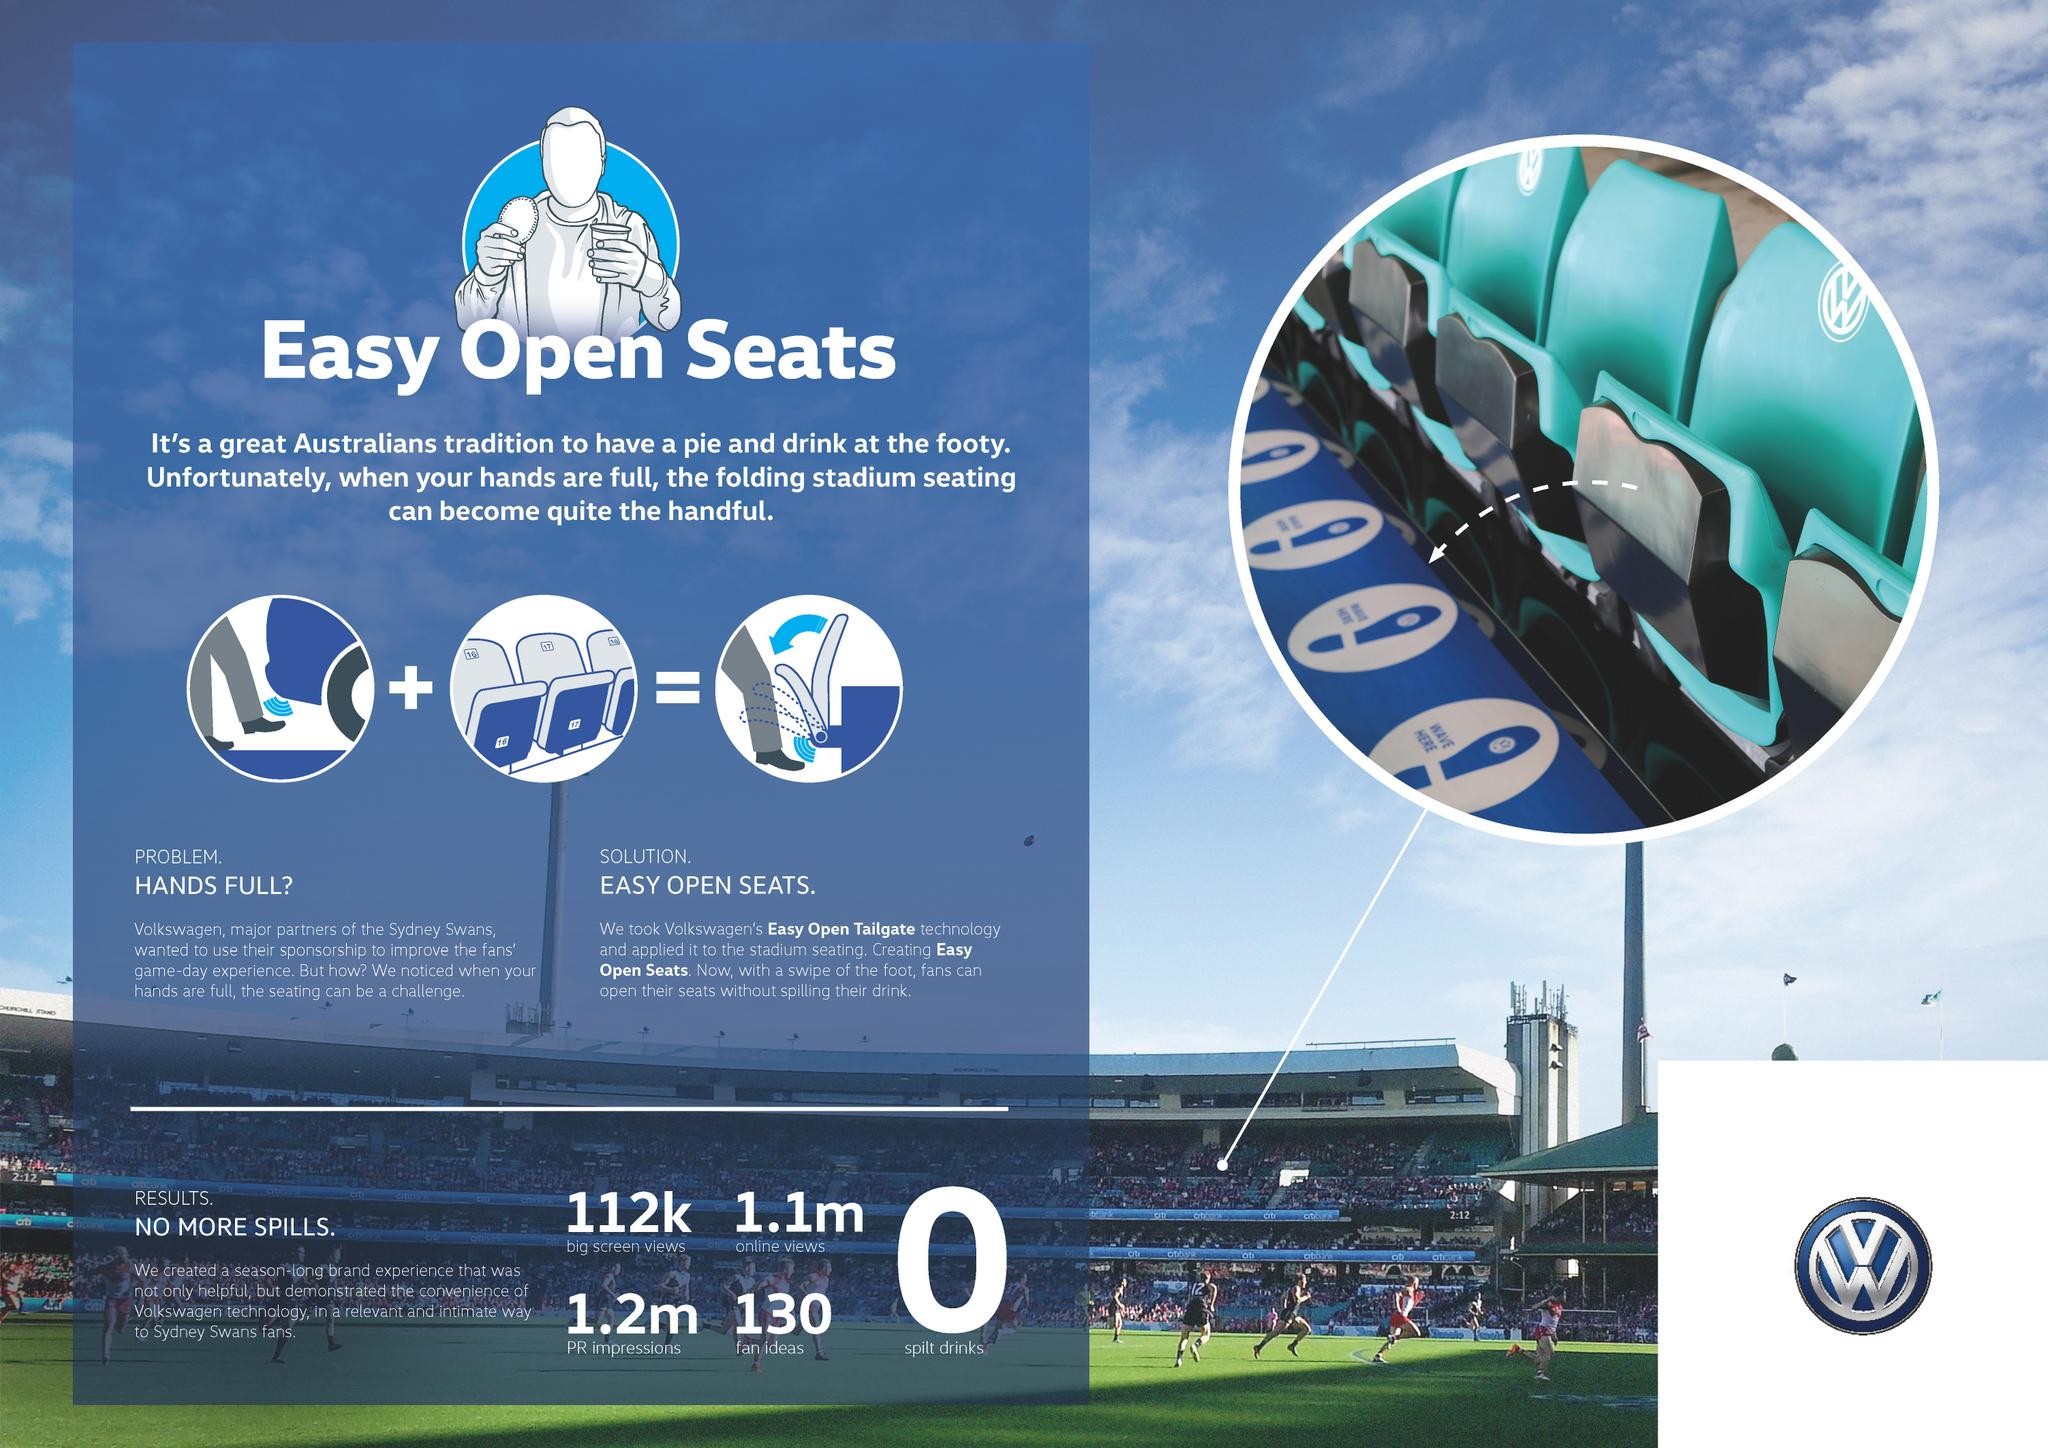 Easy Open Seats